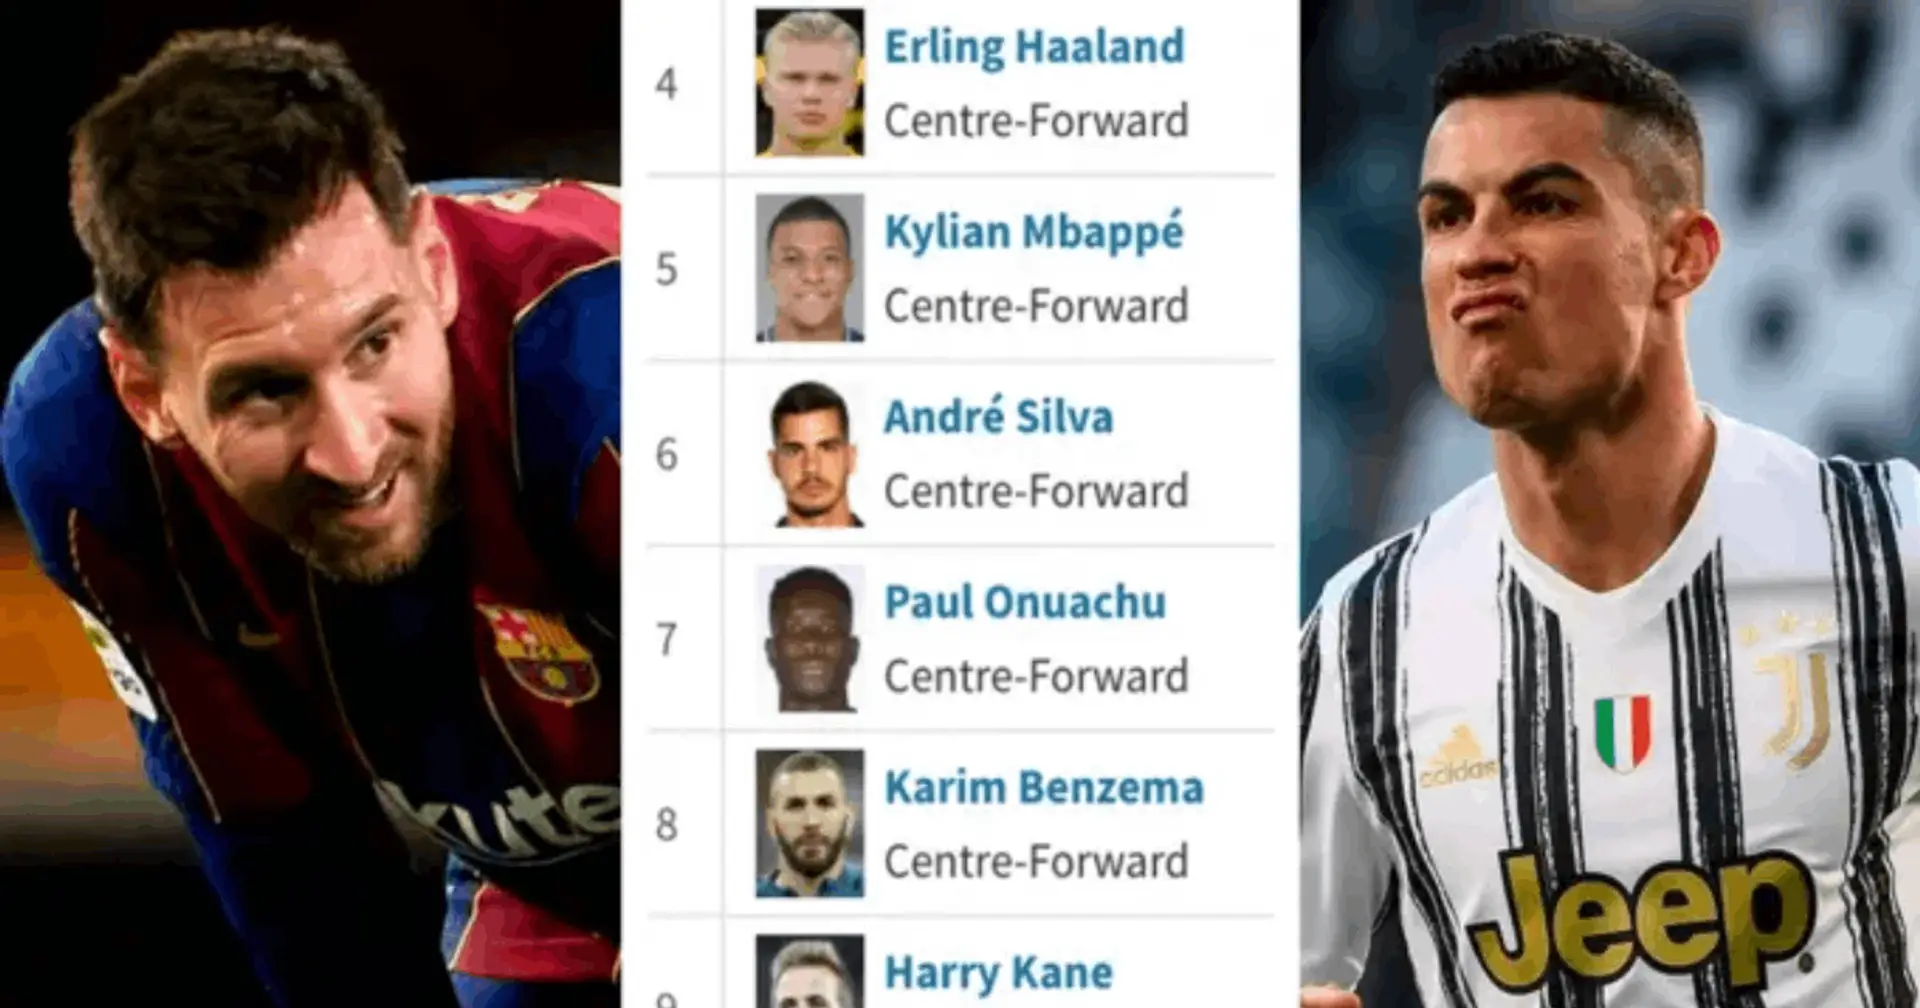 European Golden Boot race: Karim Benzema in the leading pack, Lewandowski ahead of Messi and Ronaldo